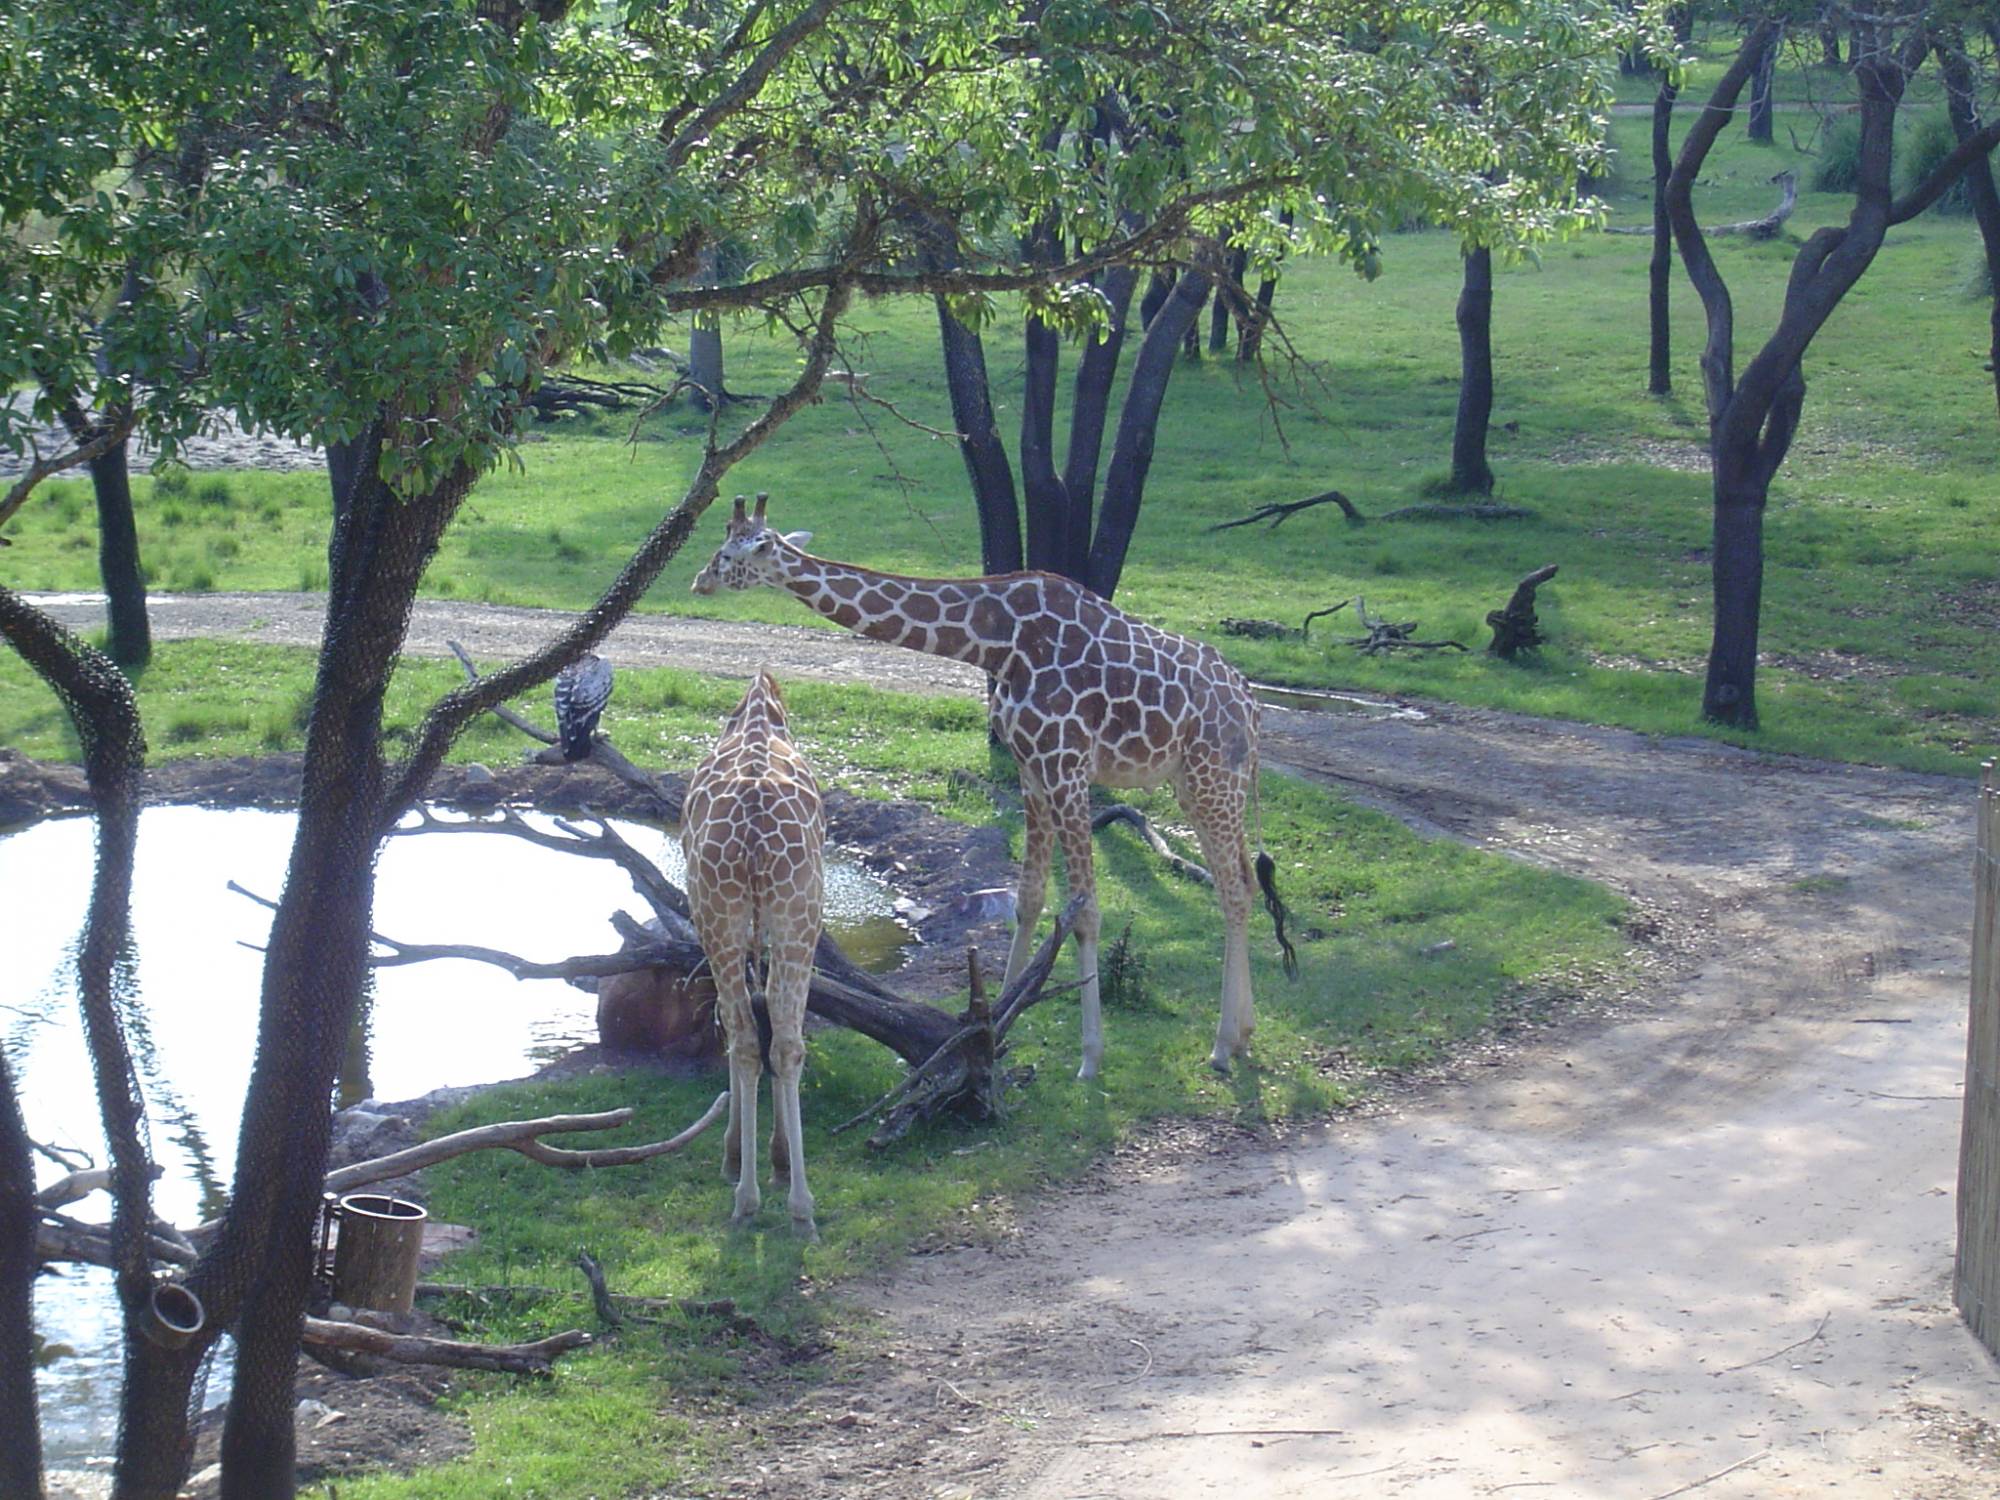 Animal Kingdom Lodge - giraffes on the savanna